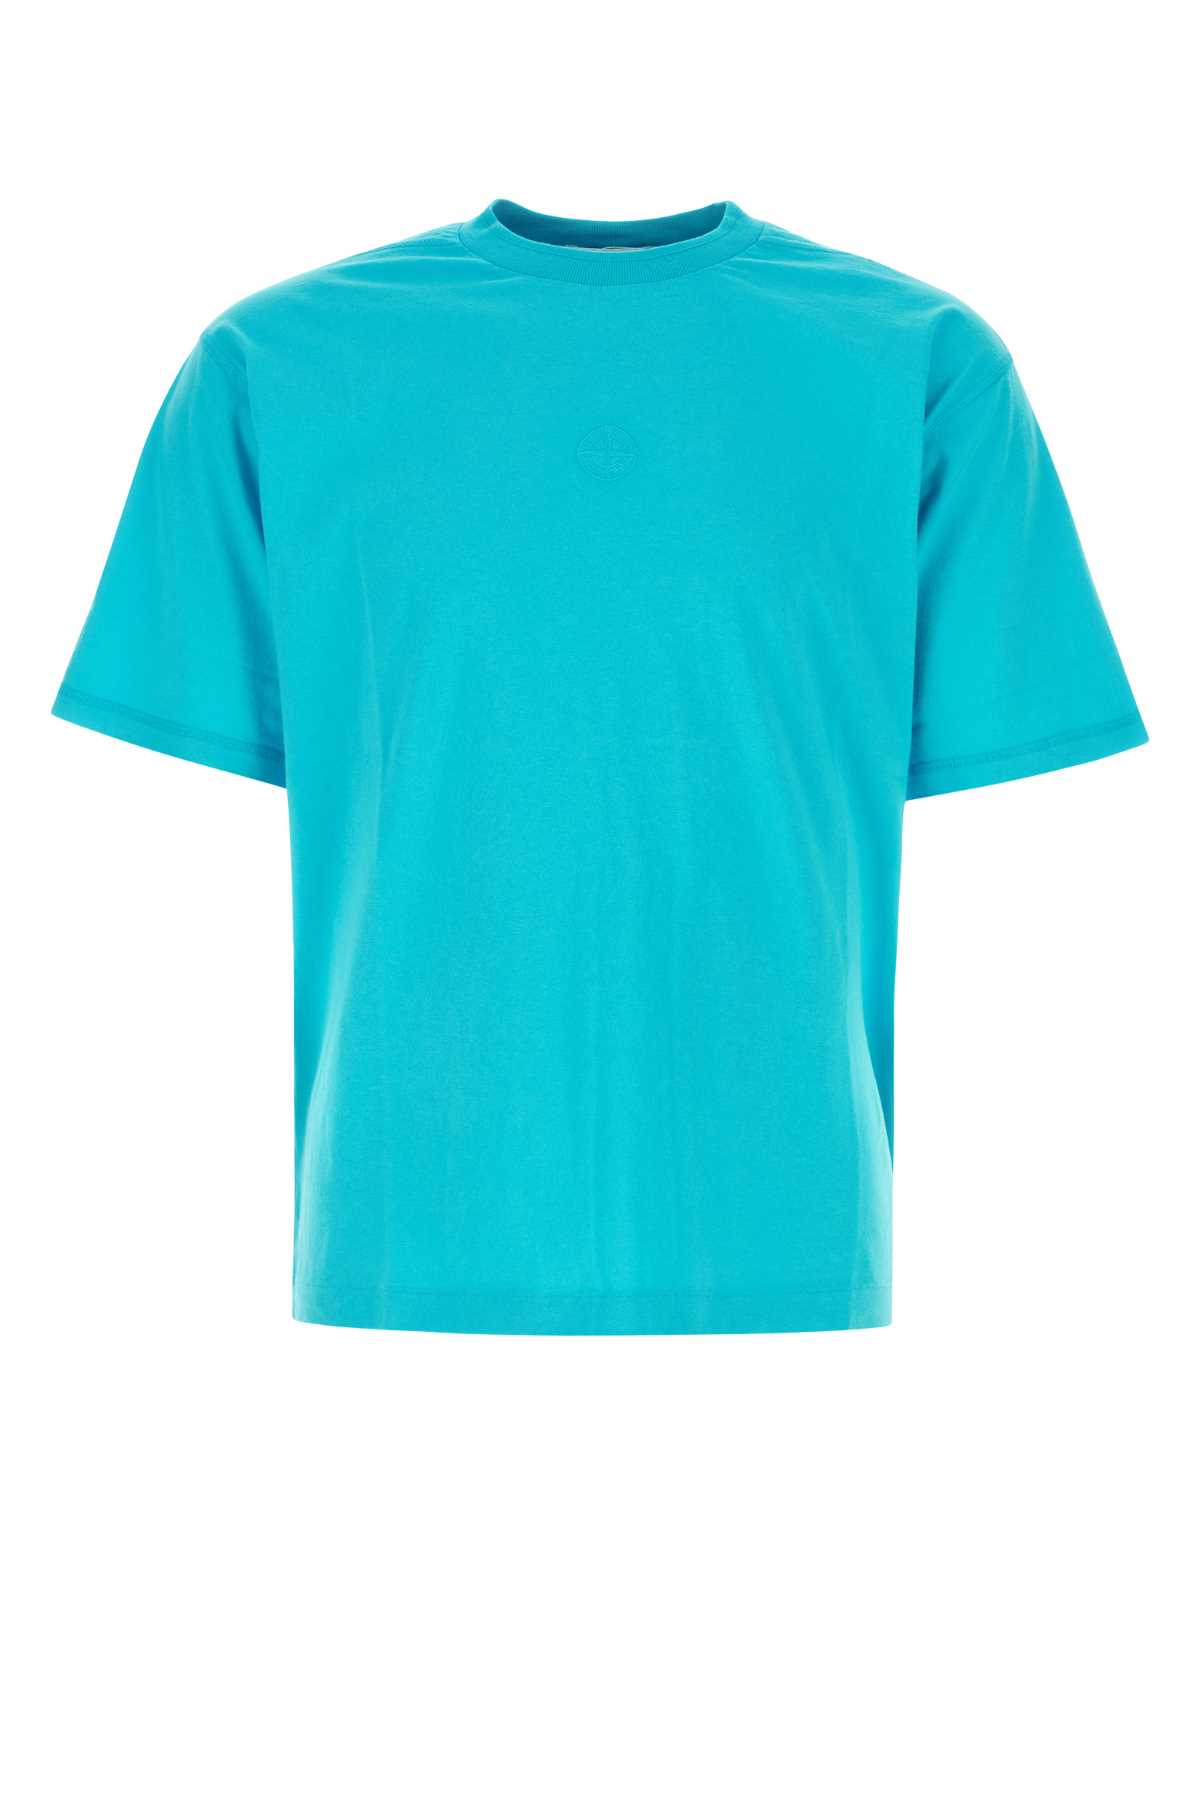 Stone Island Turquoise Cotton T-shirt